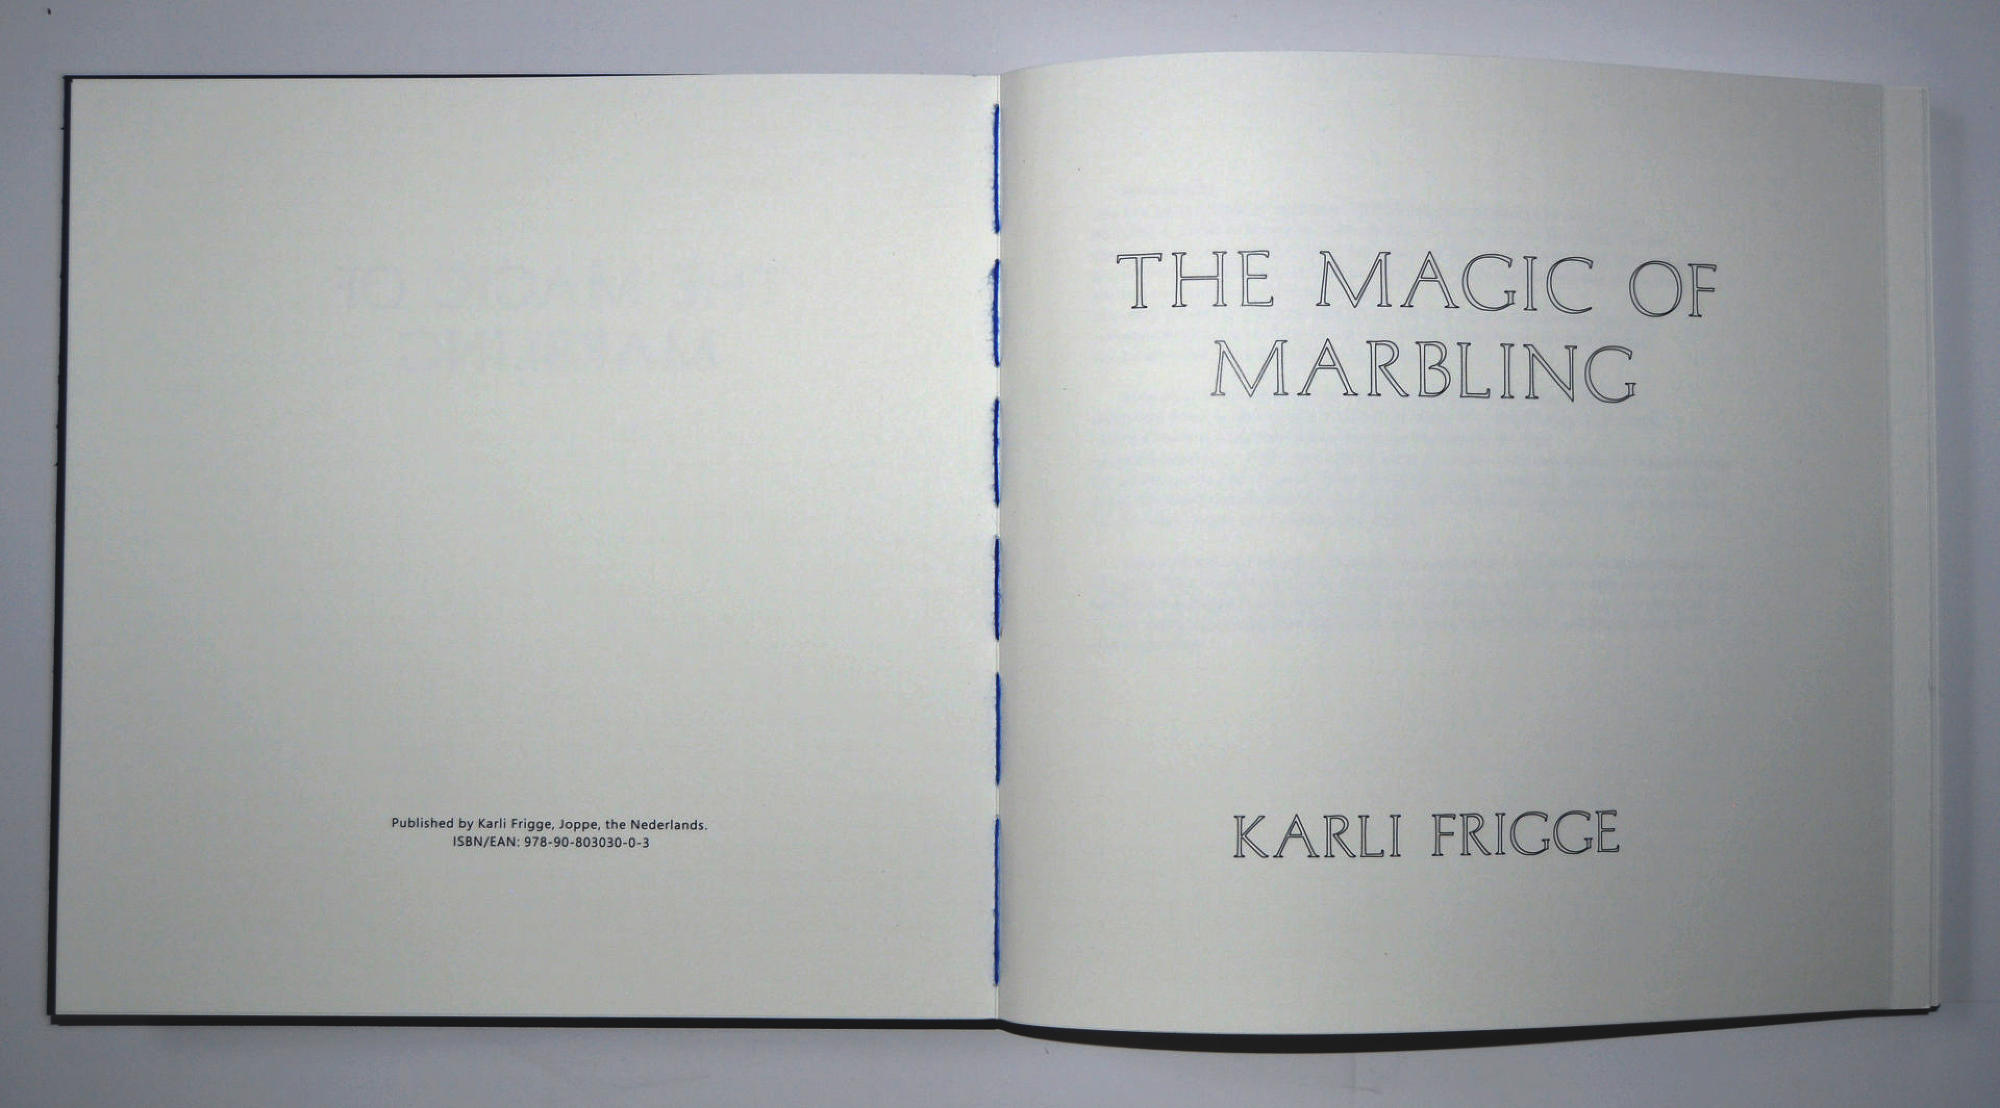 Karli Frigge, Sample book of the fancy paper factory Aschaffenburg